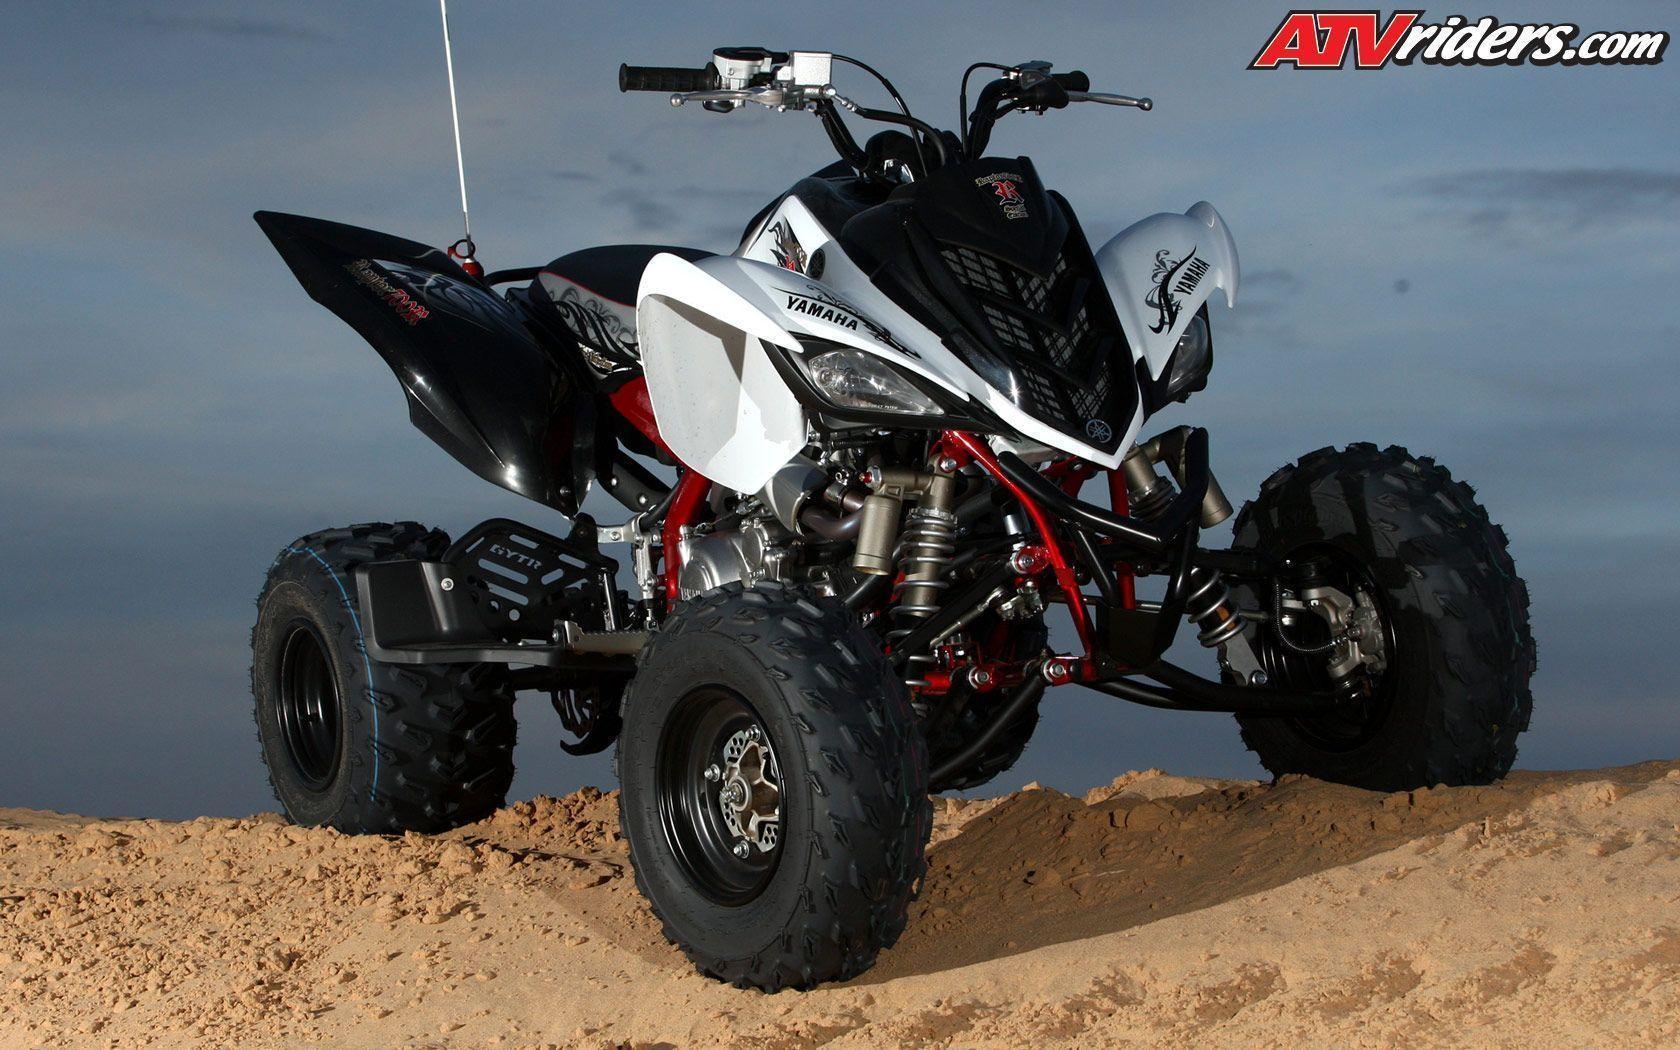 Special Edition Yamaha Raptor ATV - "Wednesday Wallpaper